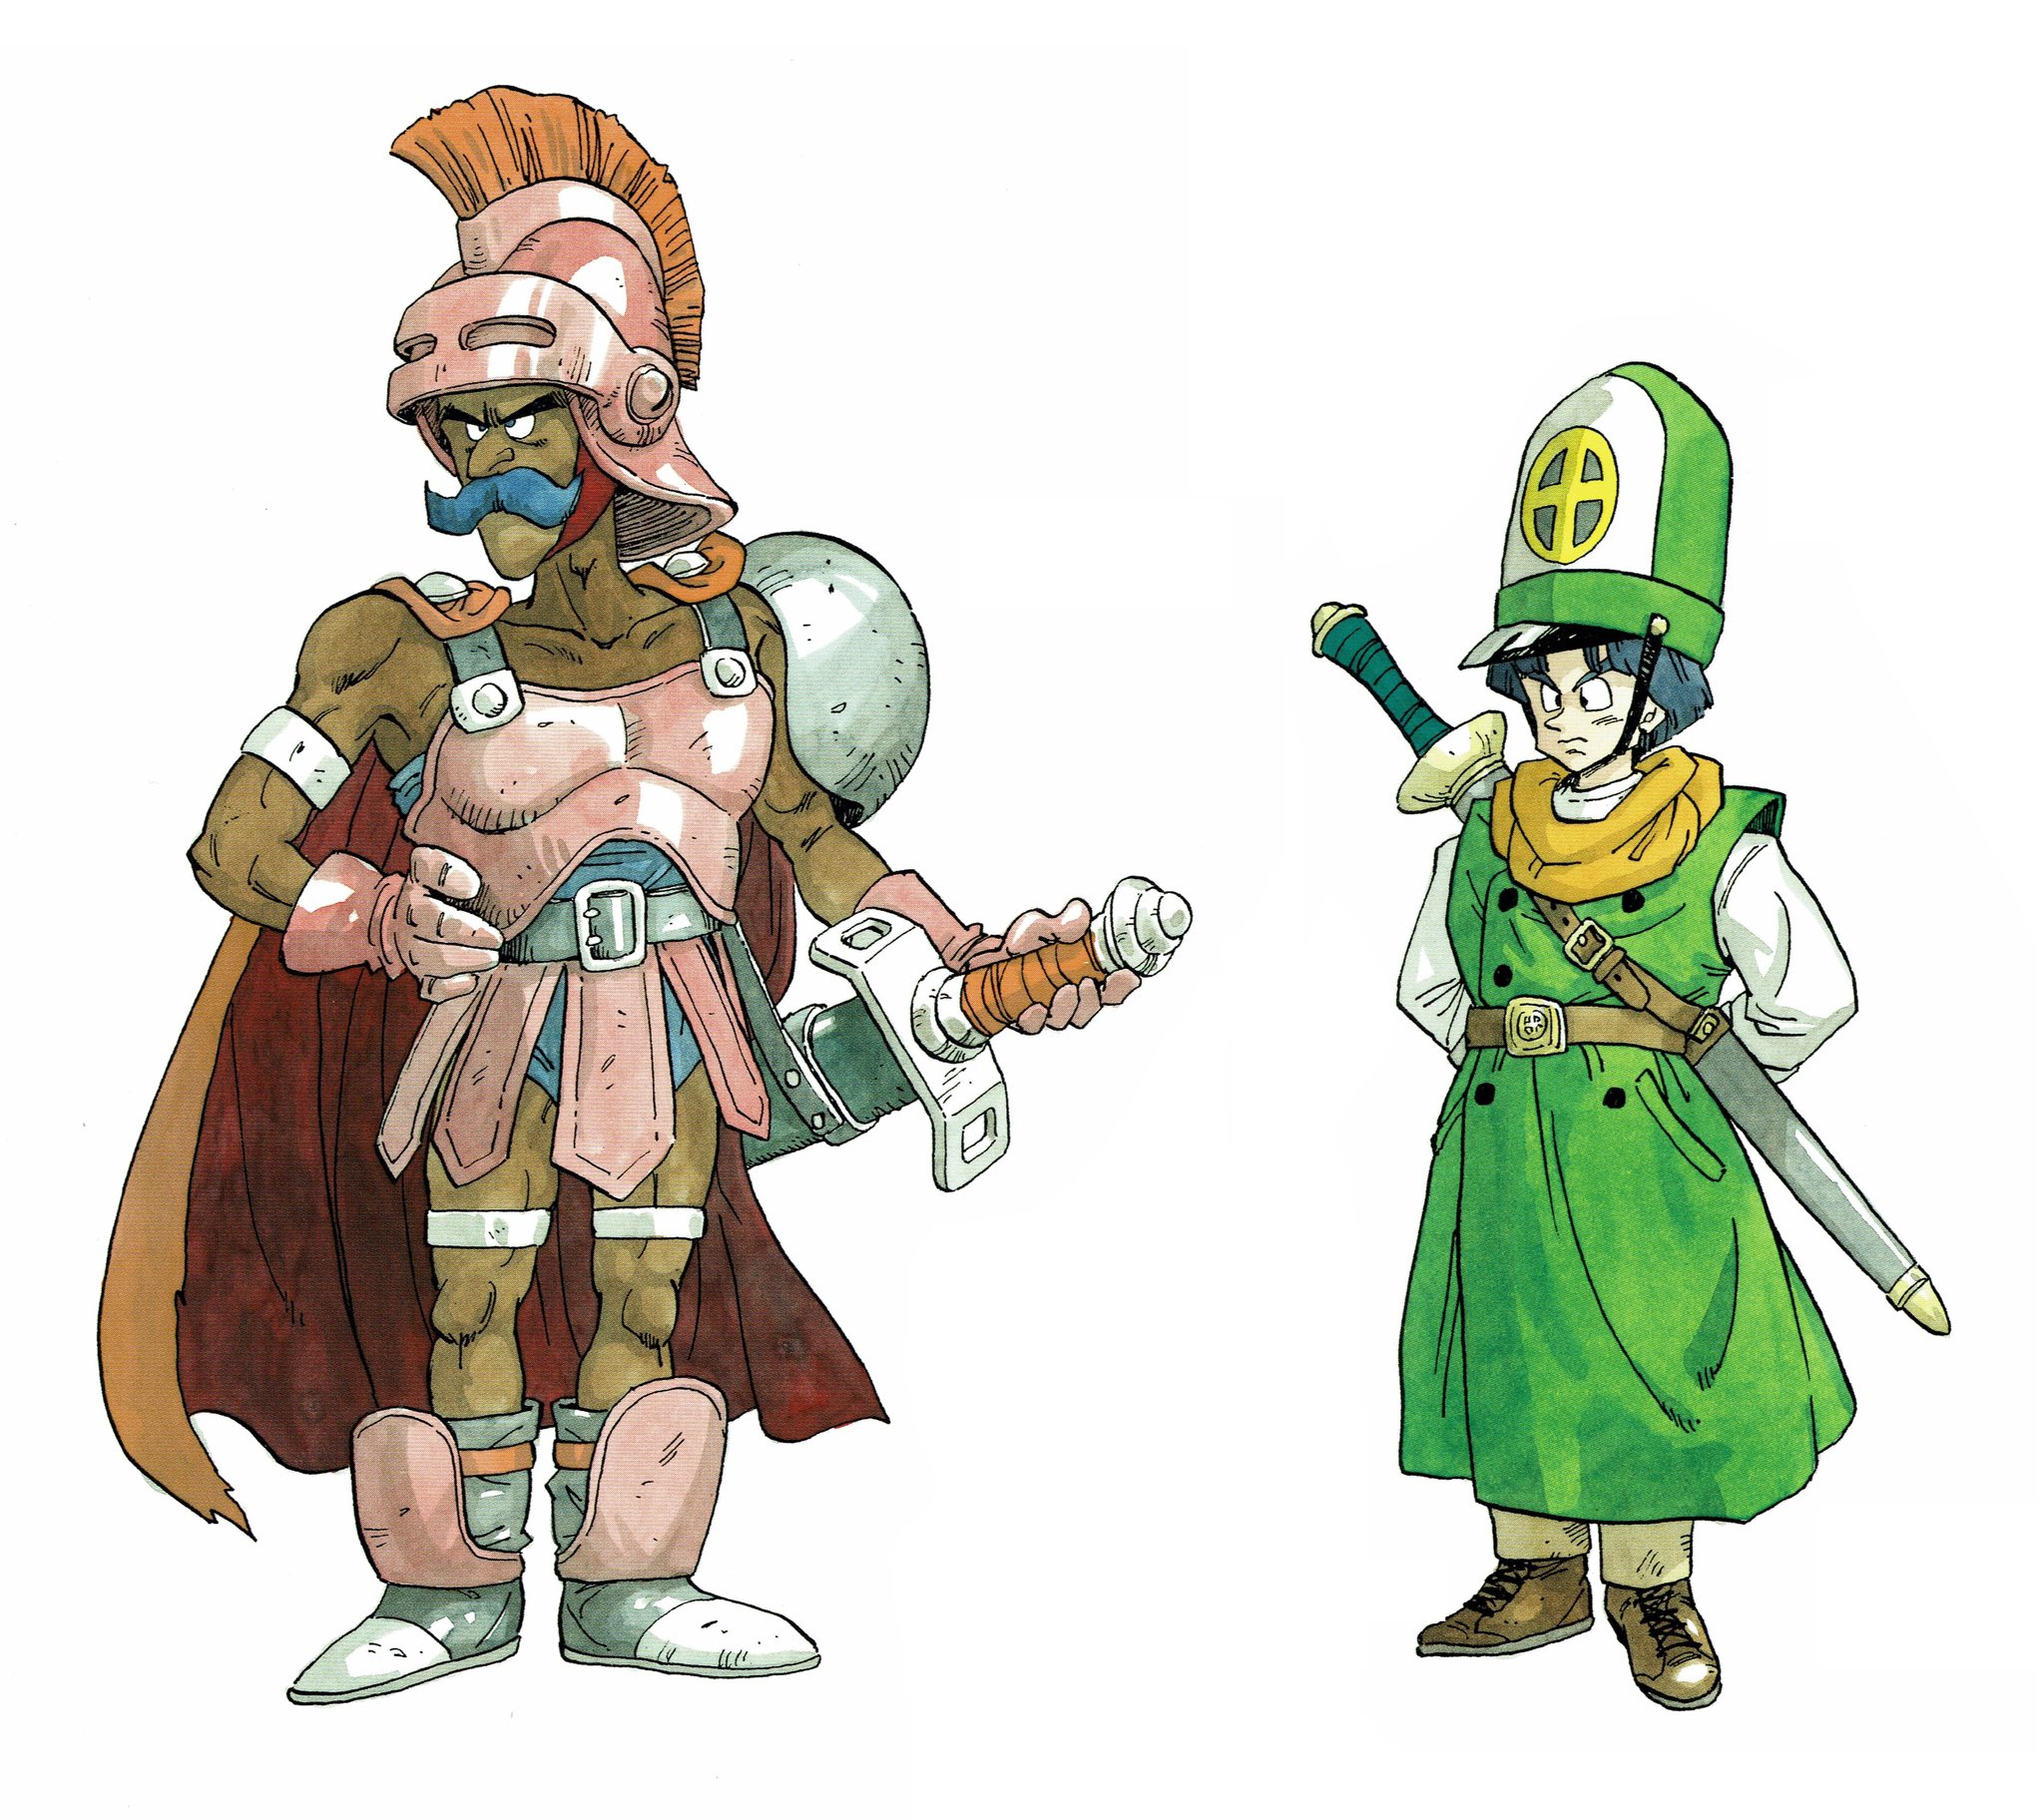 VideoGameArt&Tidbits on X: Dragon Quest III - character artwork